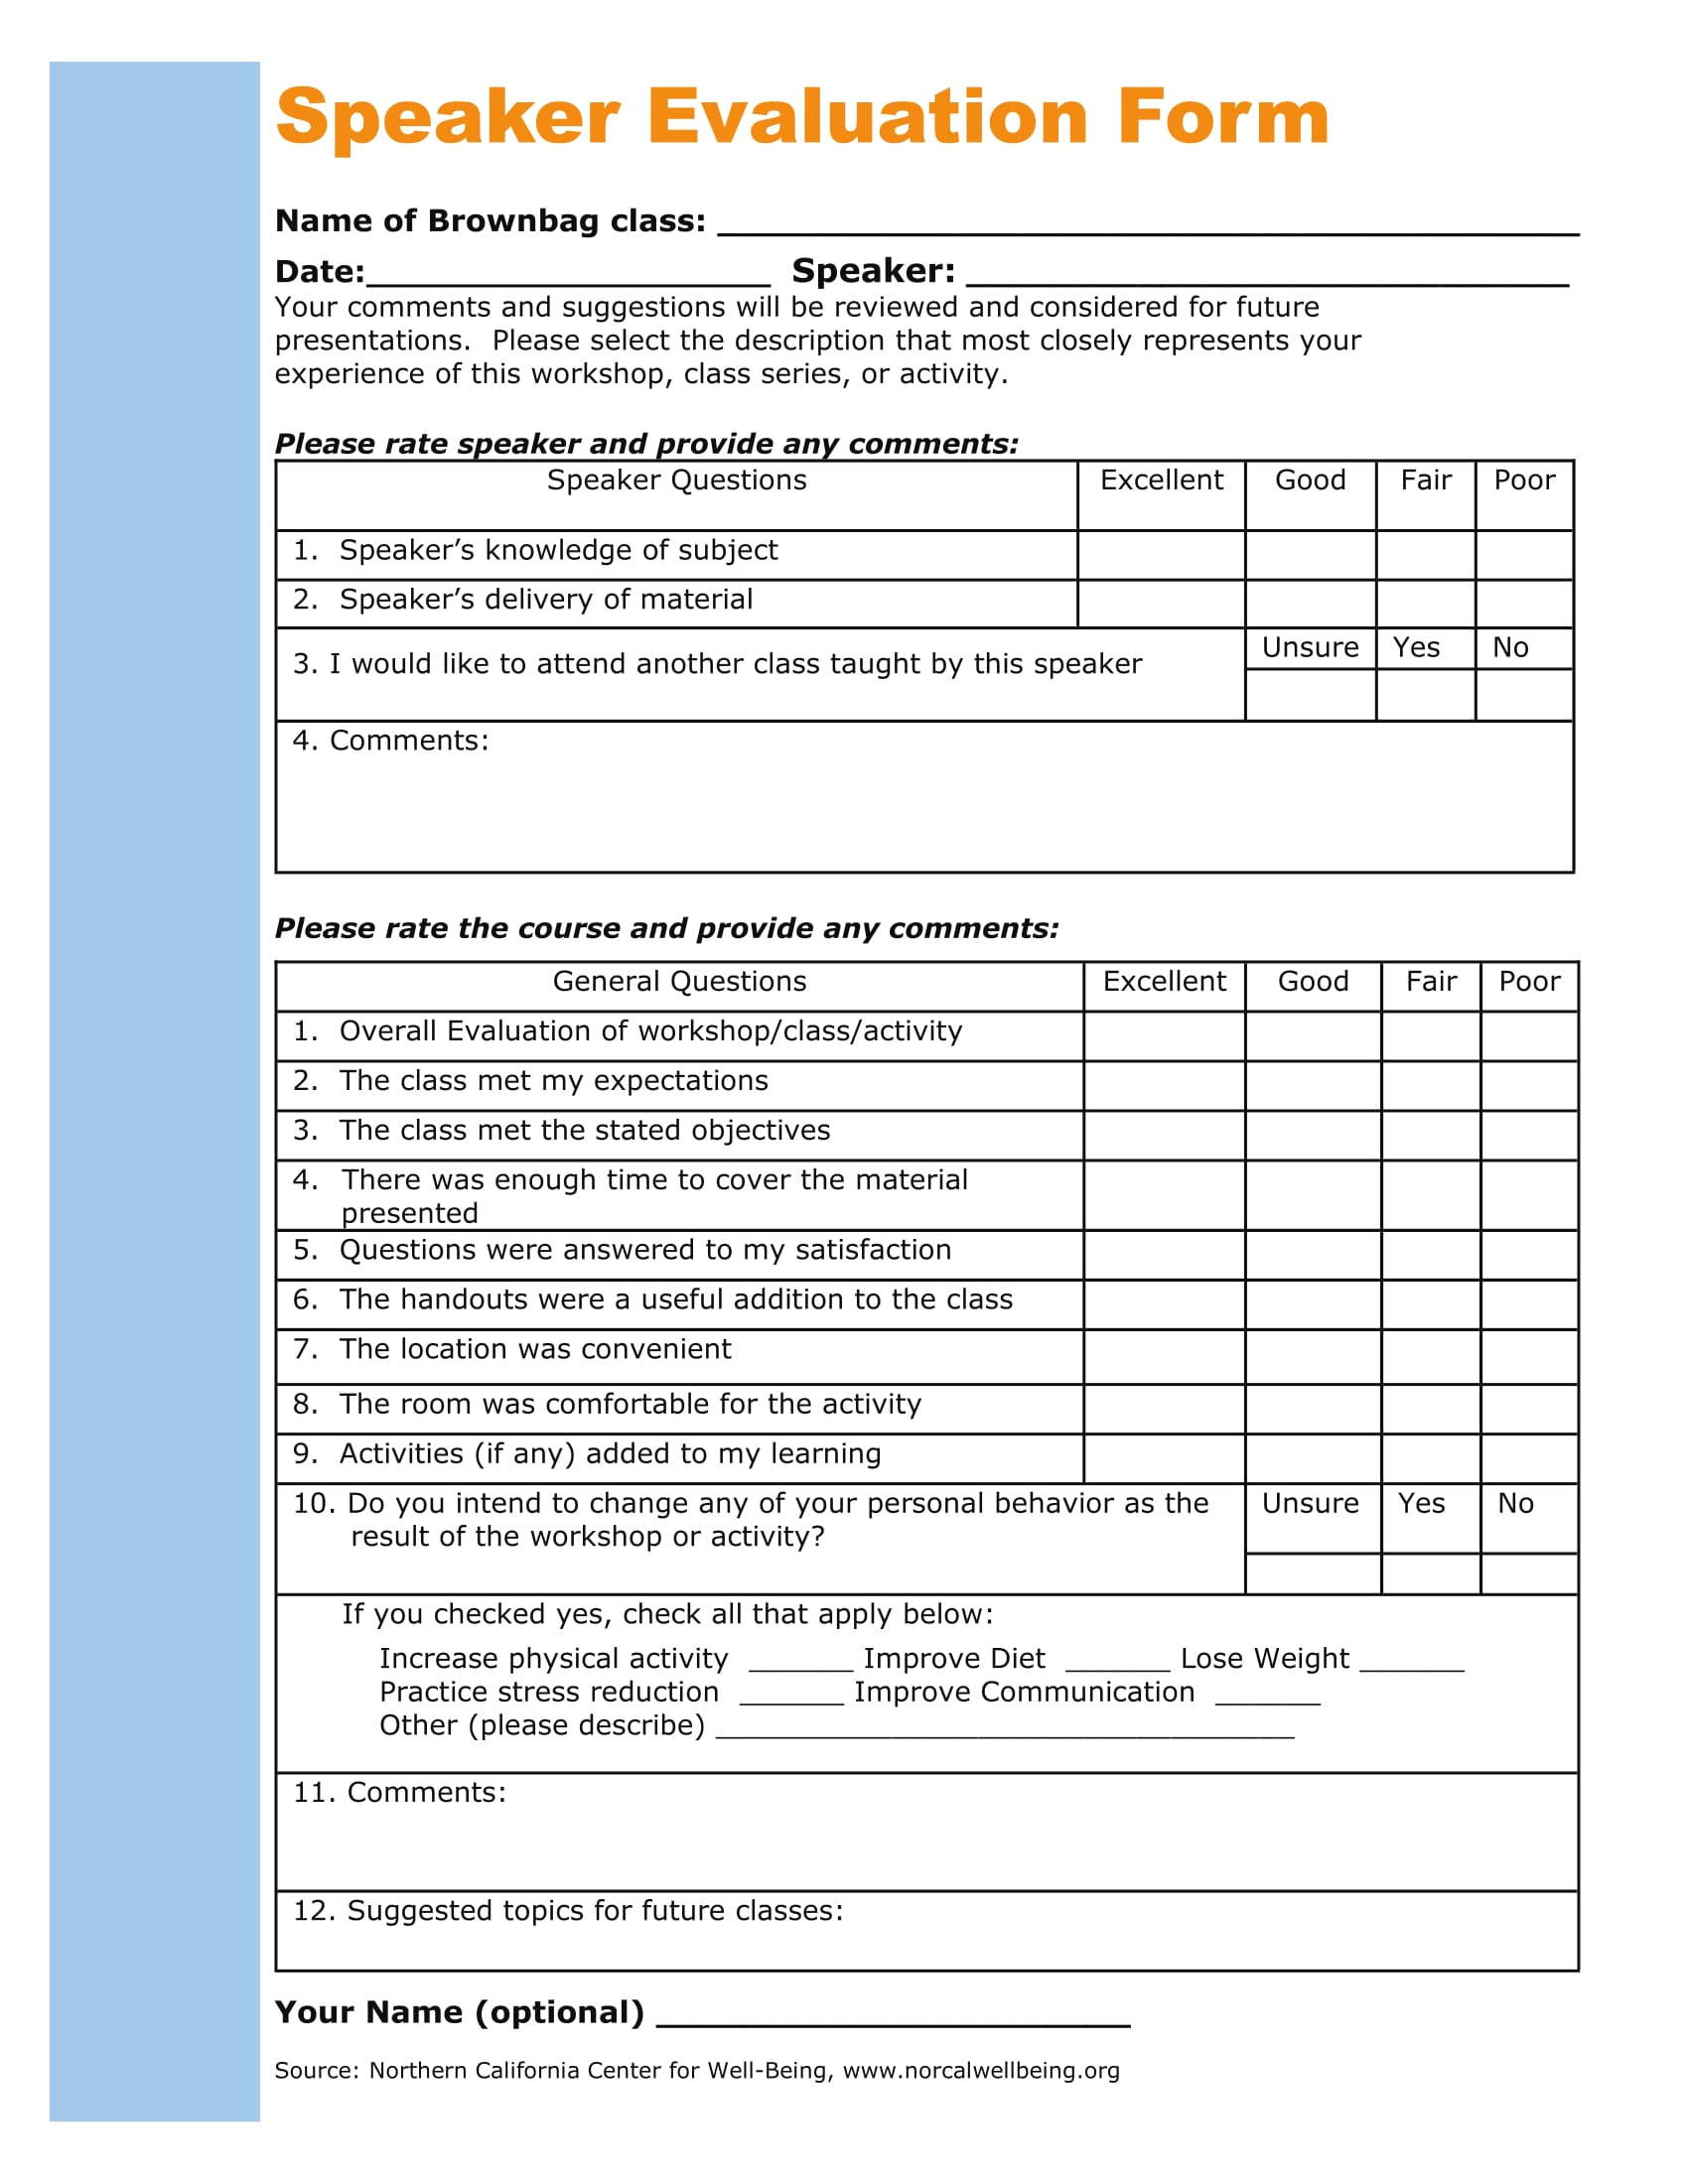 FREE 14 Speaker Evaluation Forms In PDF